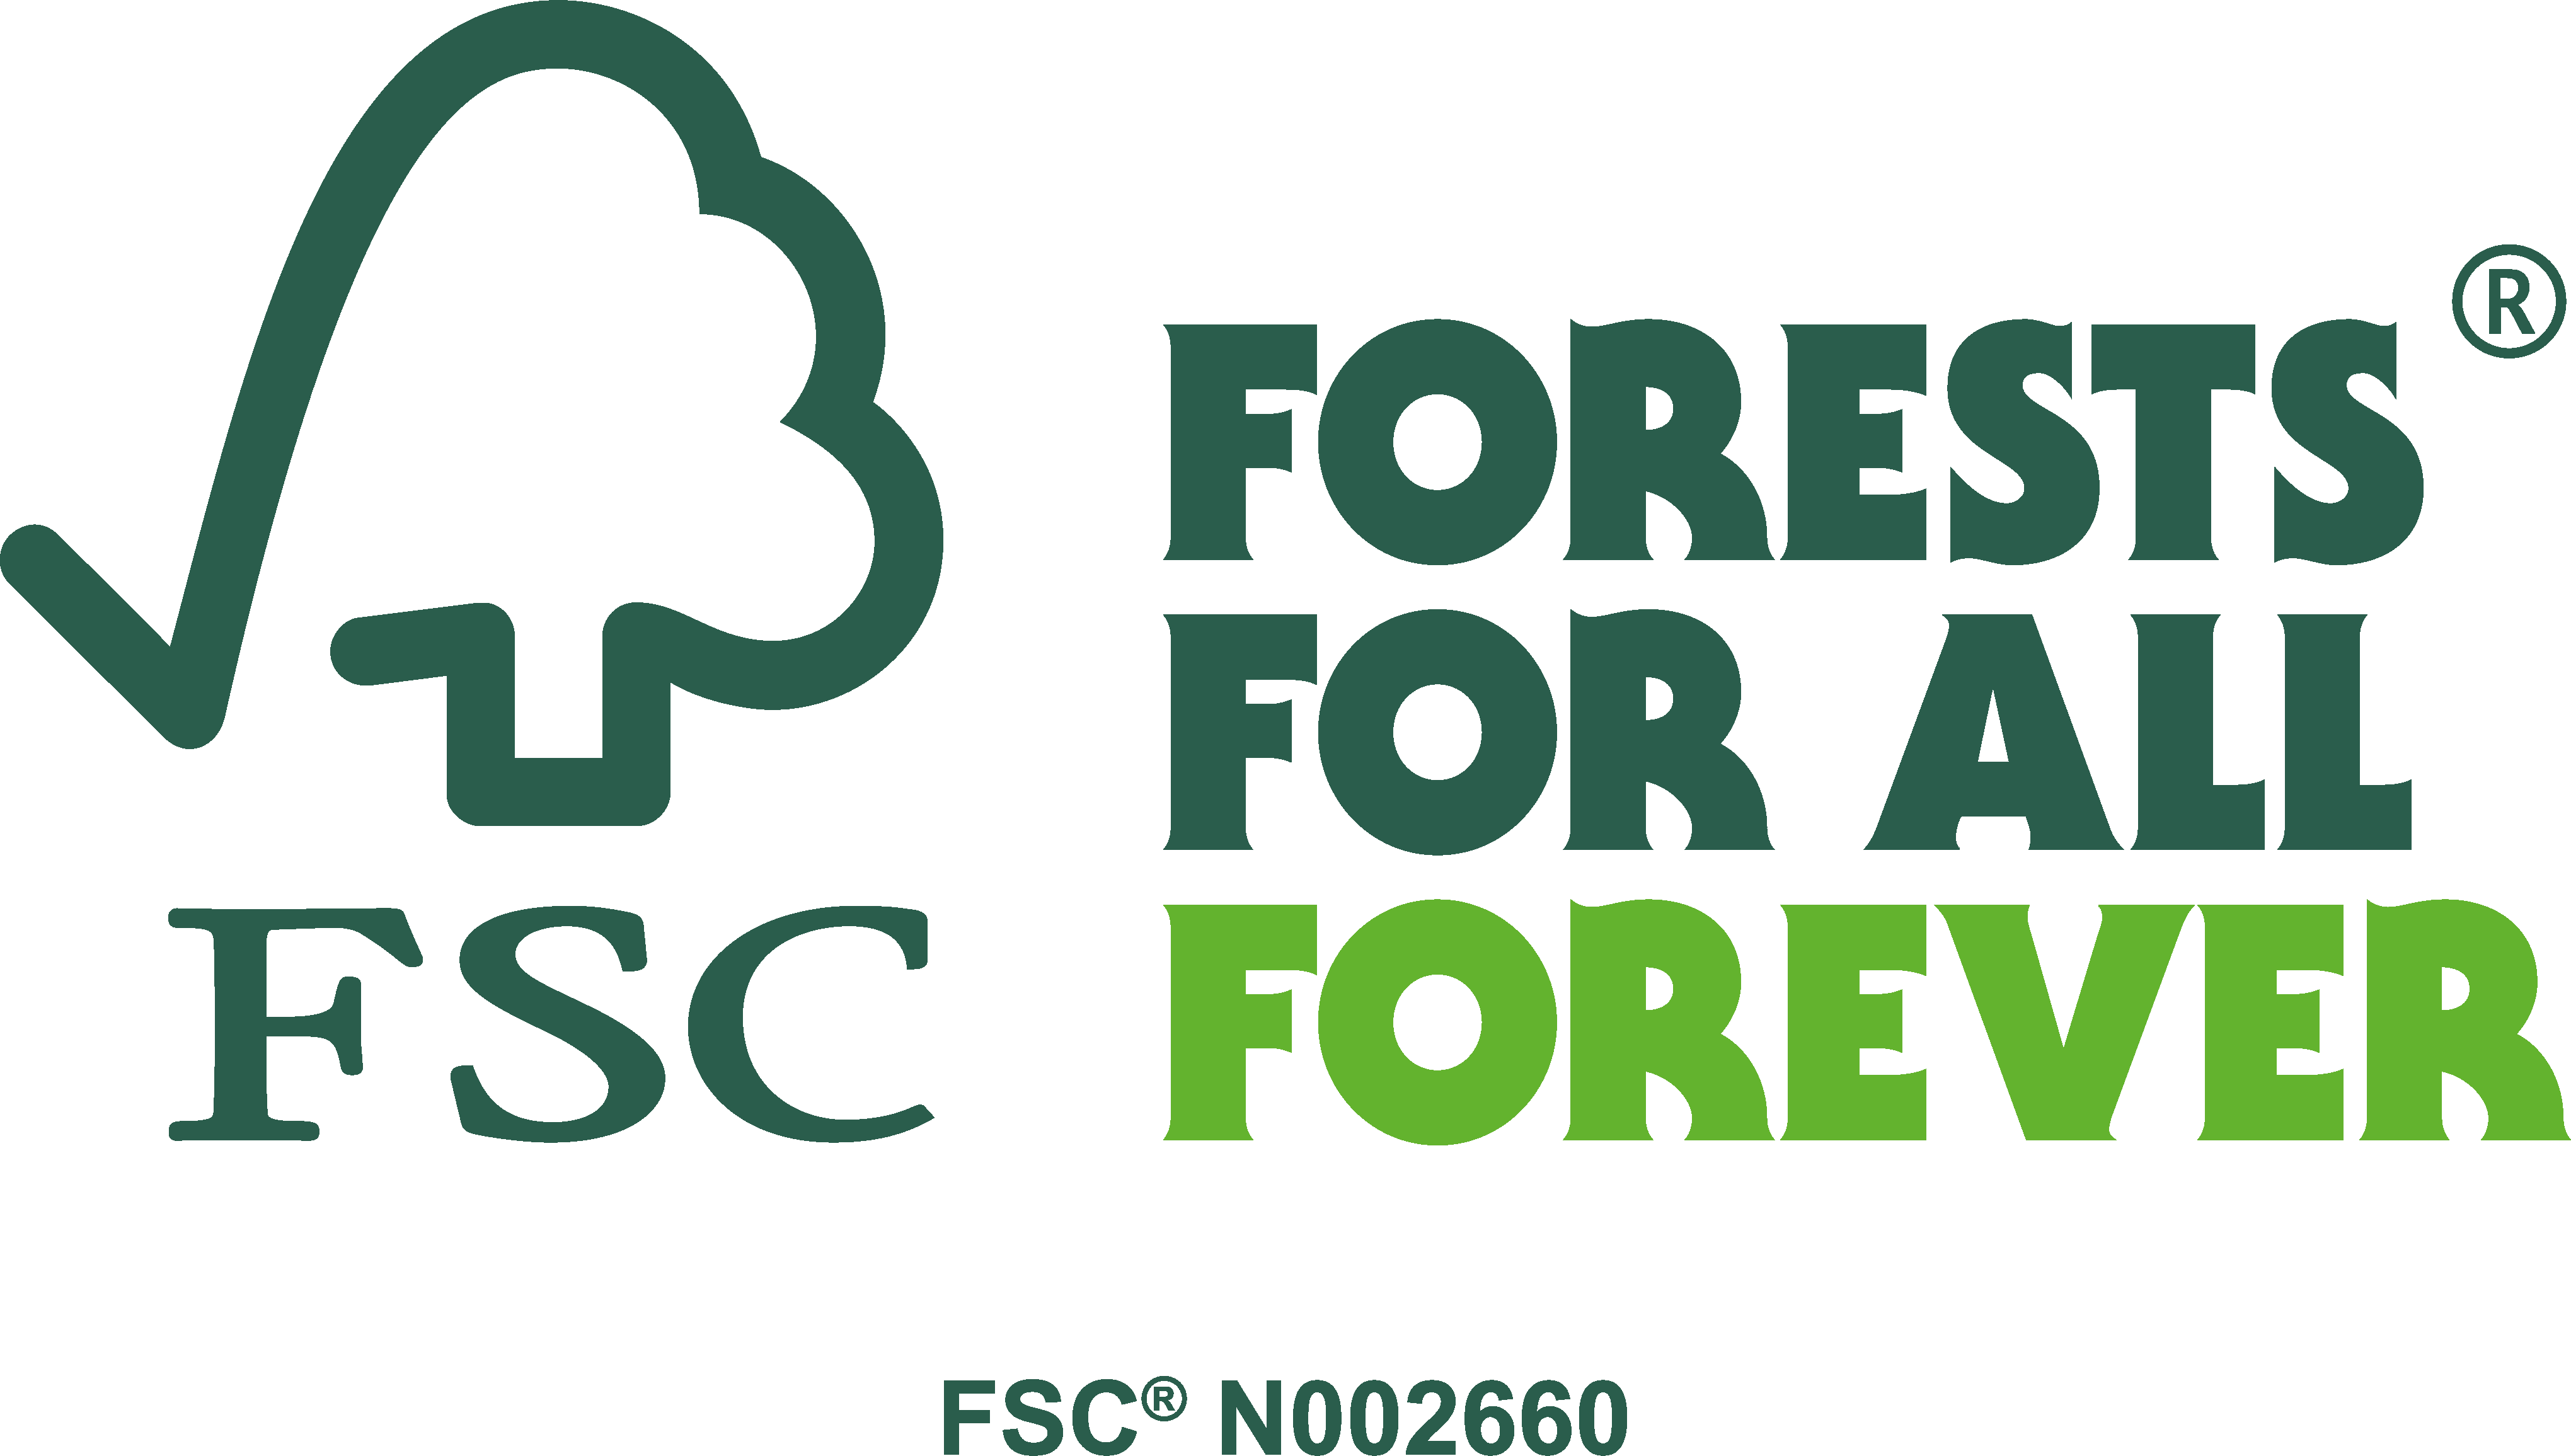 FSC - Forests For All Forever